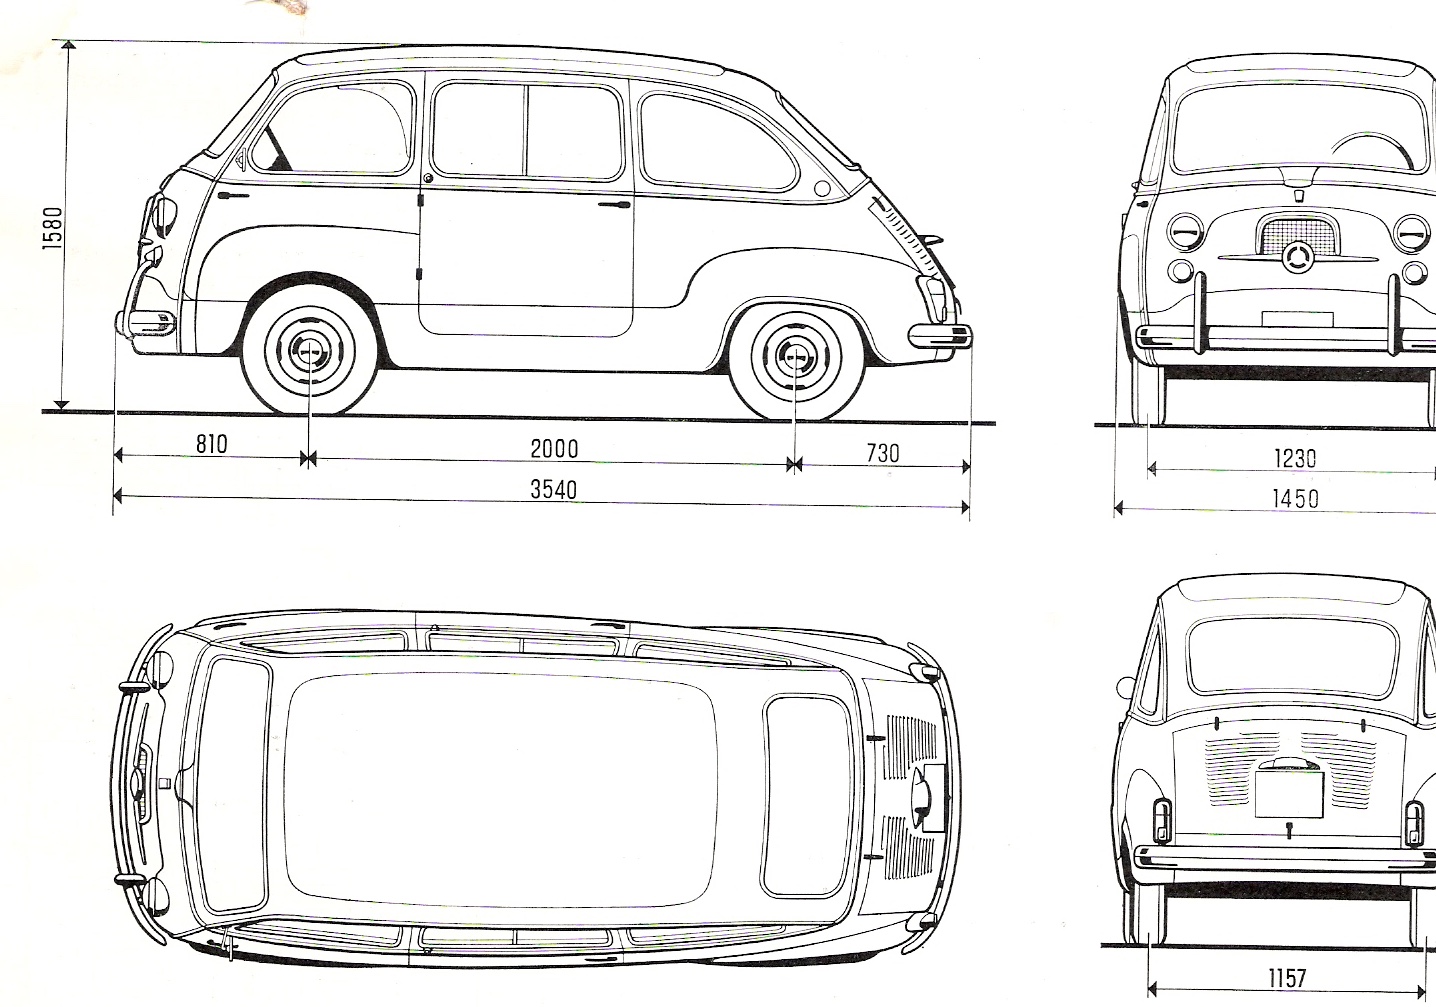 Fiat 600 Multipla blueprint